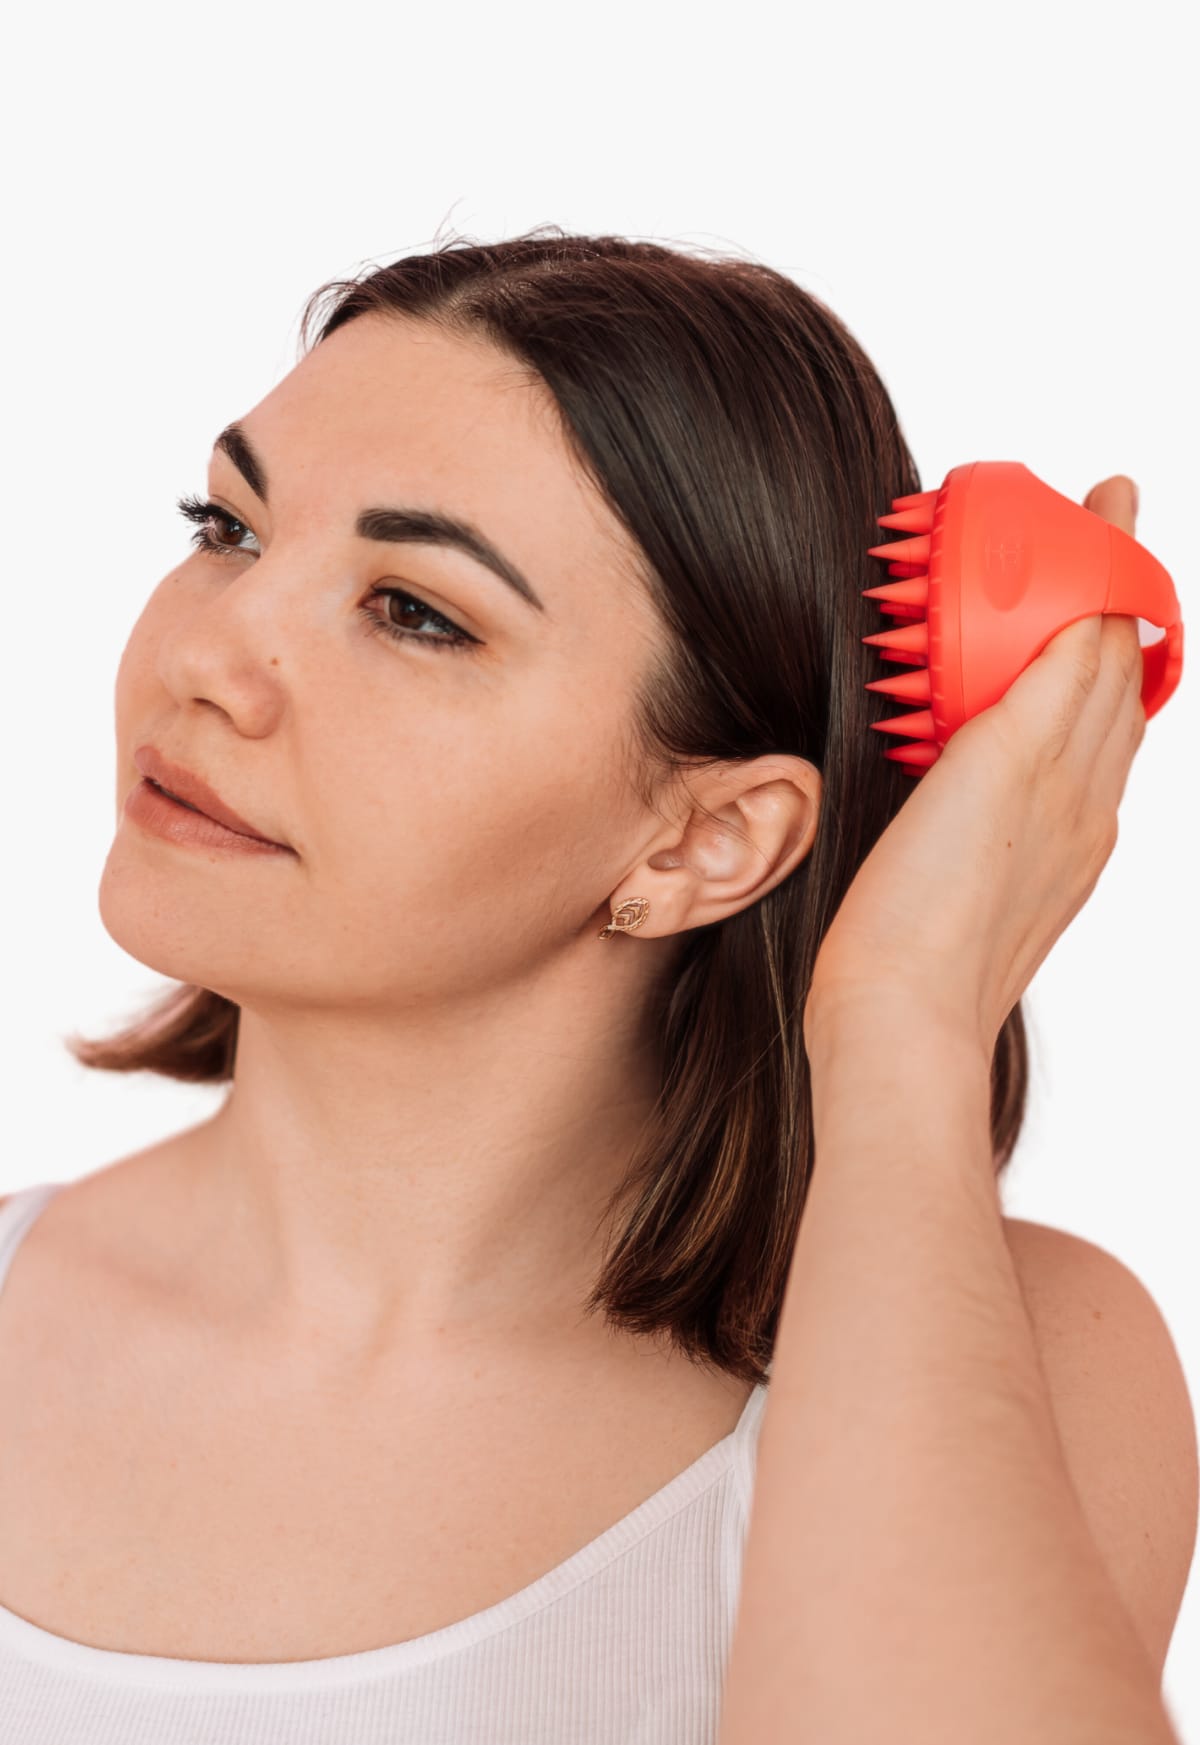 Does Scalp Massage Help Hair Growth, Scalp Massage